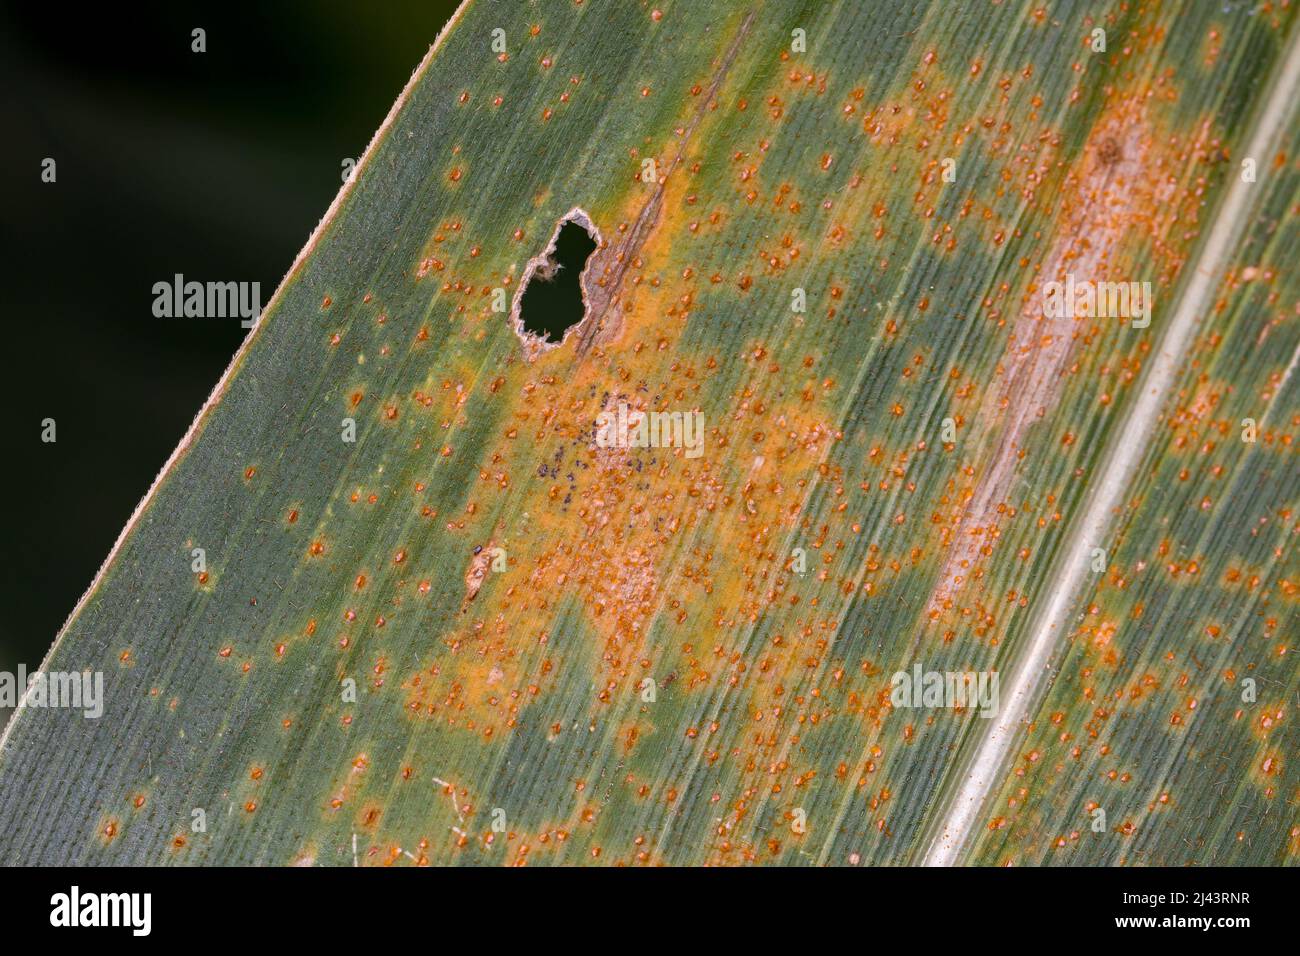 Orange corn rust fungus on leaf of cornstalk. Fungus control, plant disease and yield loss concept. Stock Photo